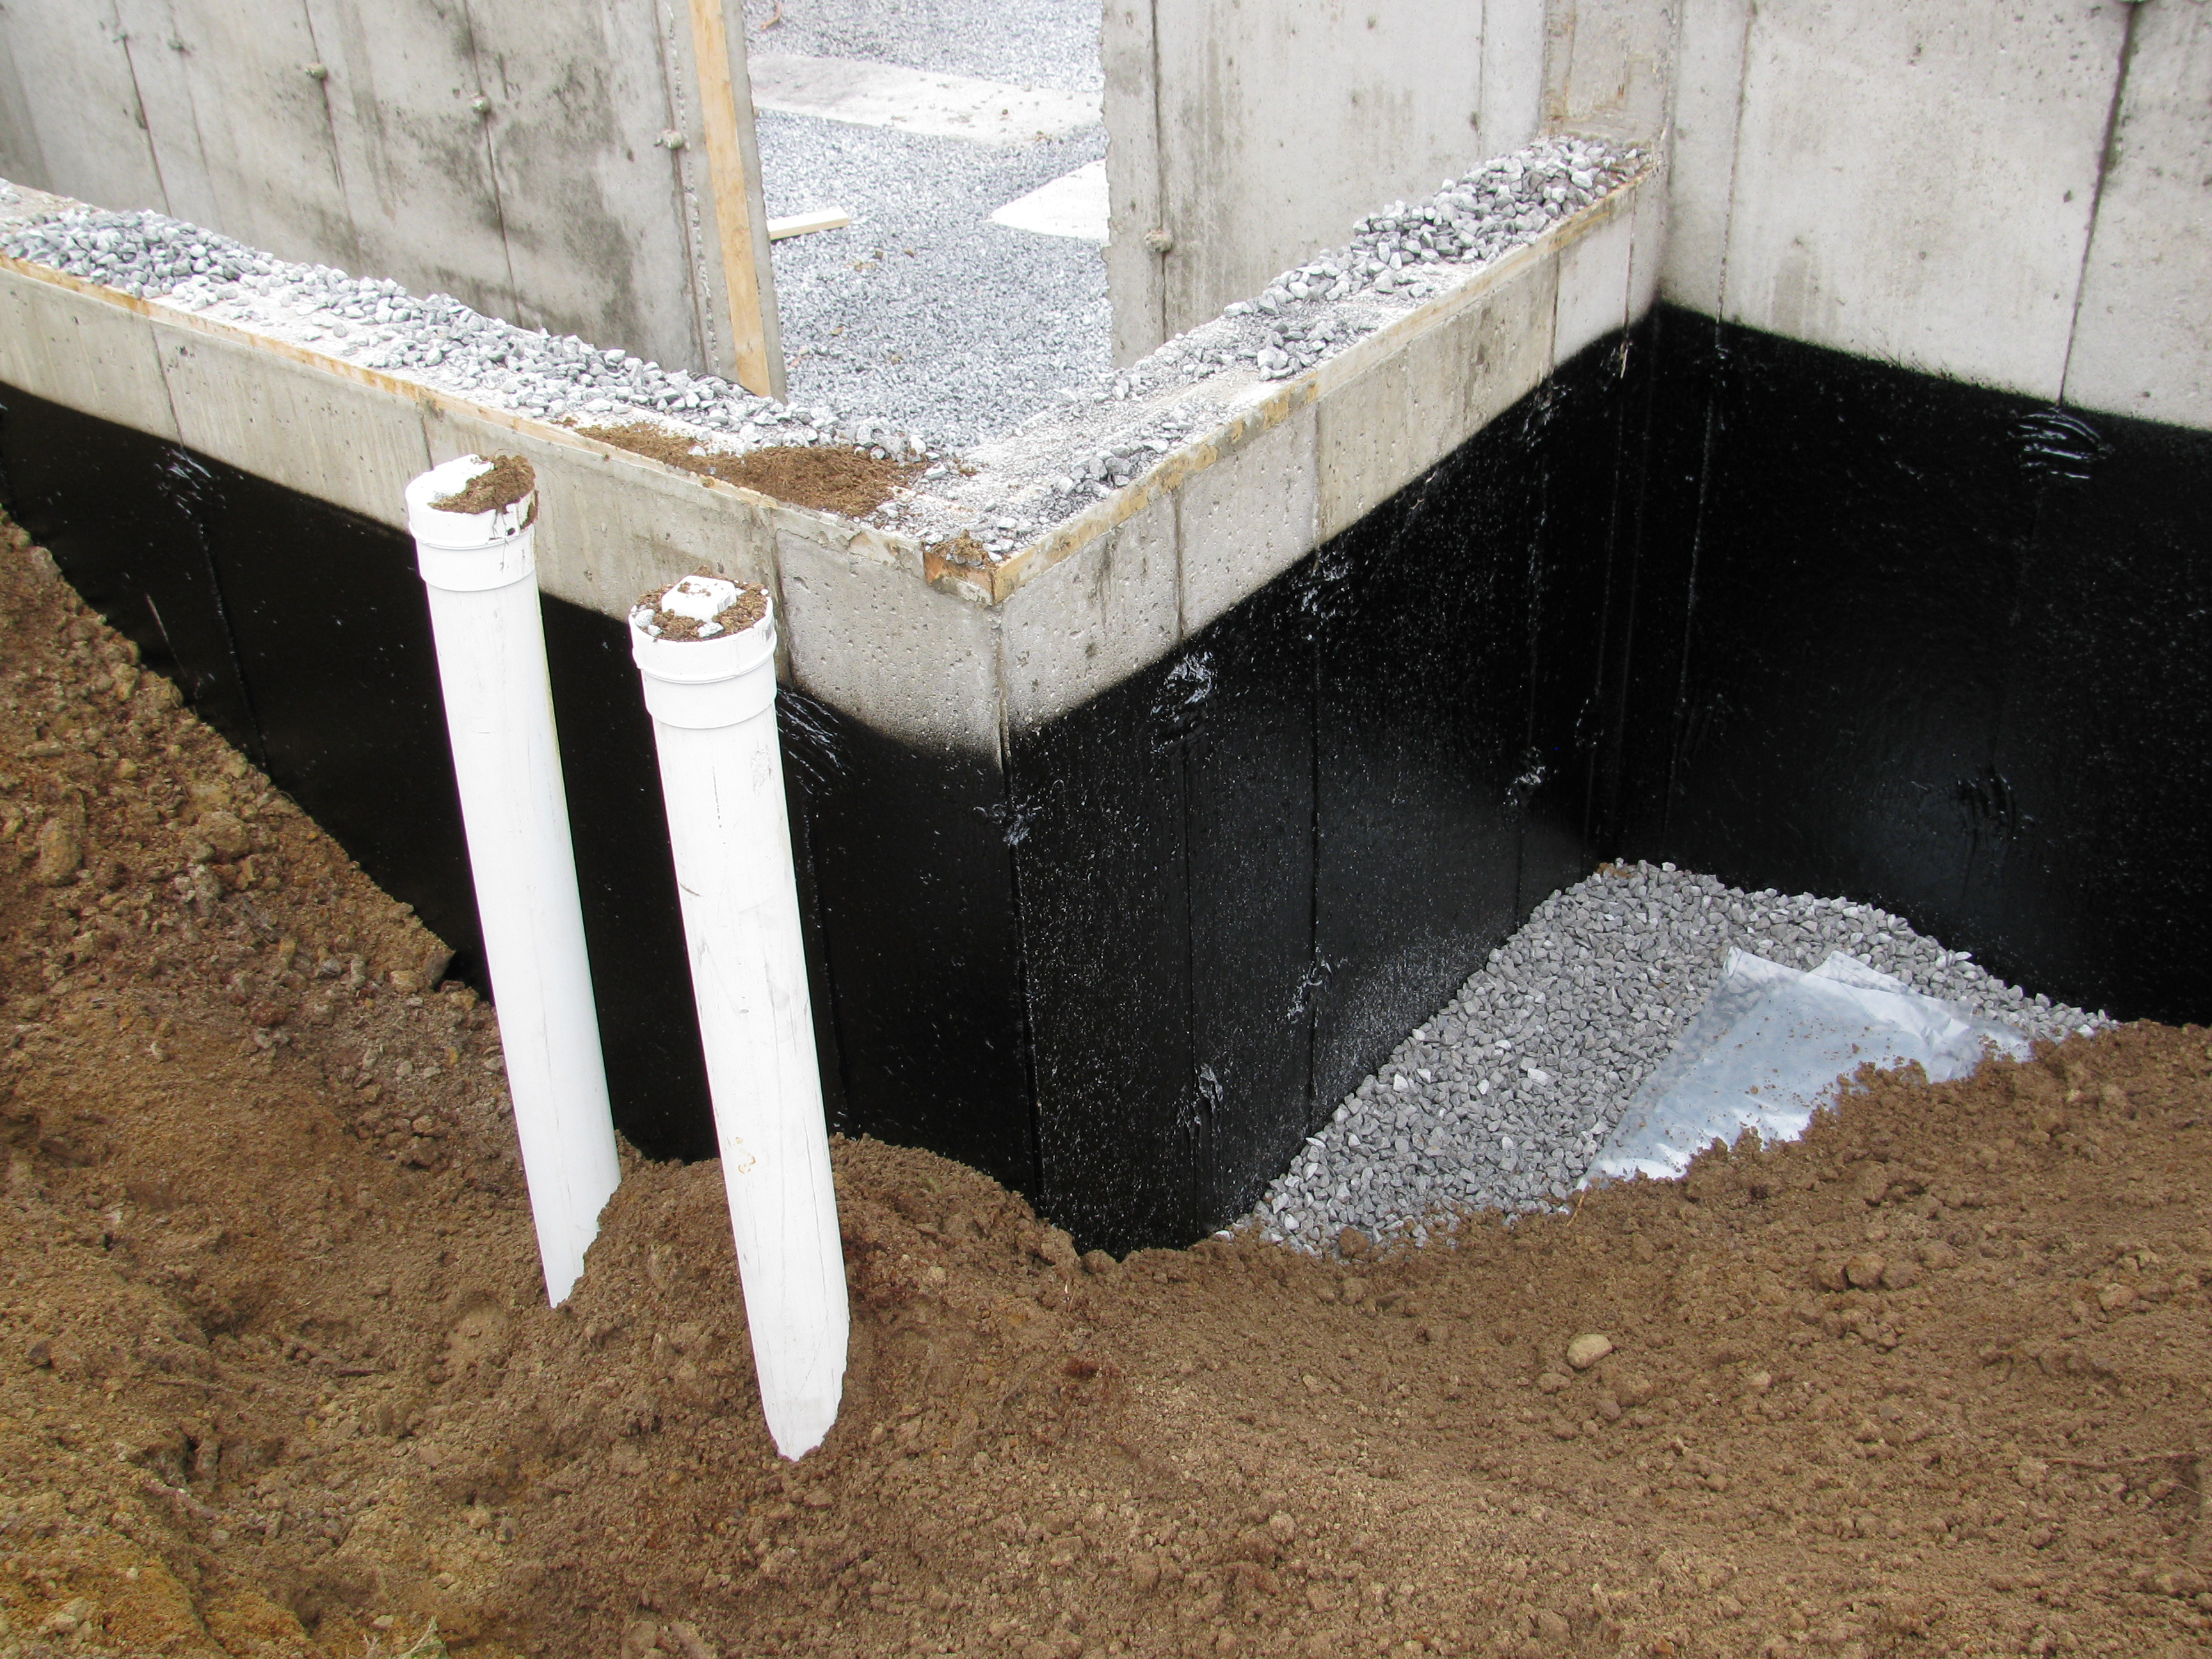 French drain installation, Mascouche, Terrebonne